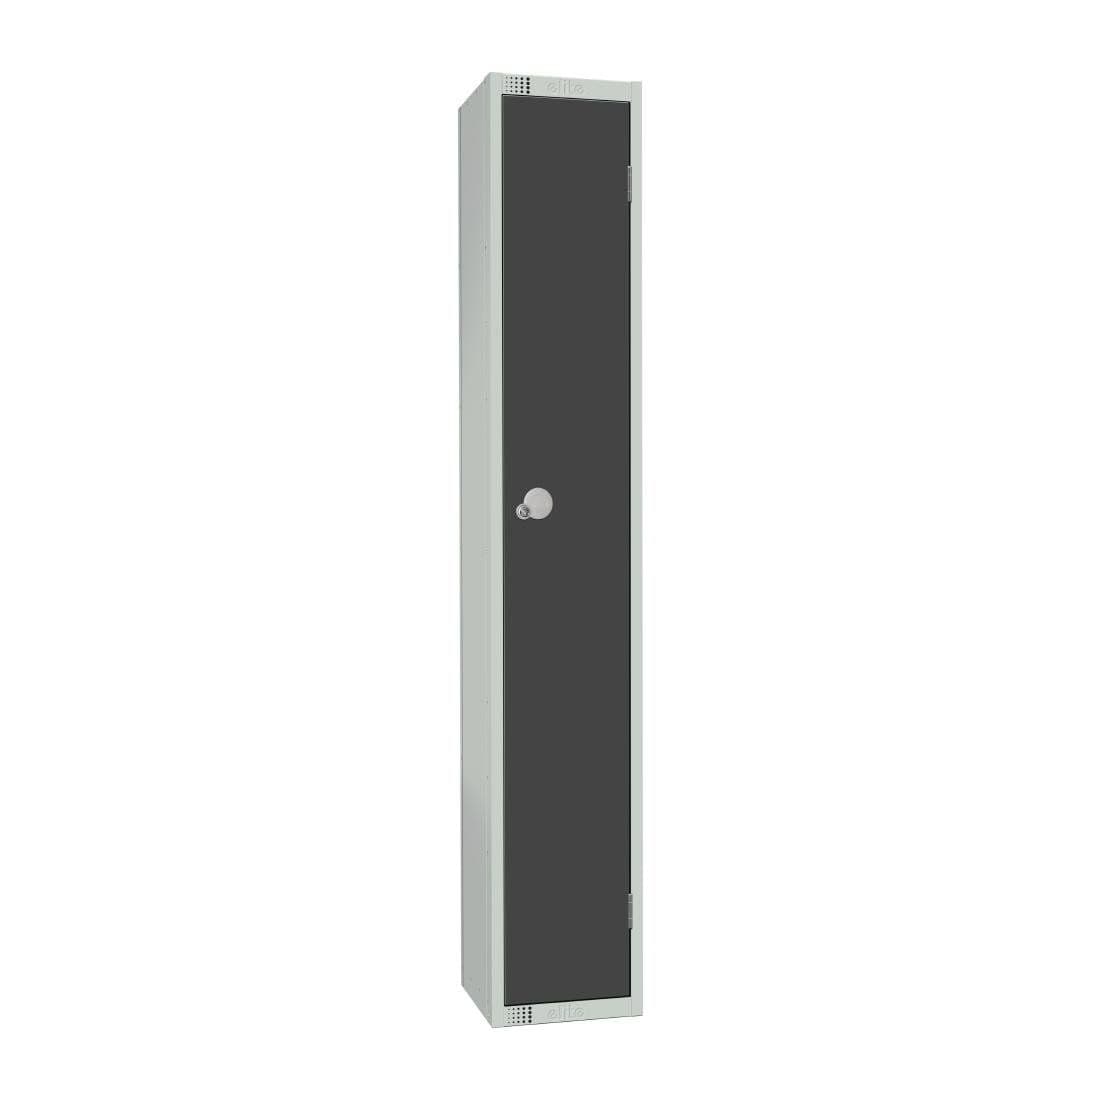 GR677-CL Elite Single Door Manual Combination Locker Locker Graphite Grey JD Catering Equipment Solutions Ltd